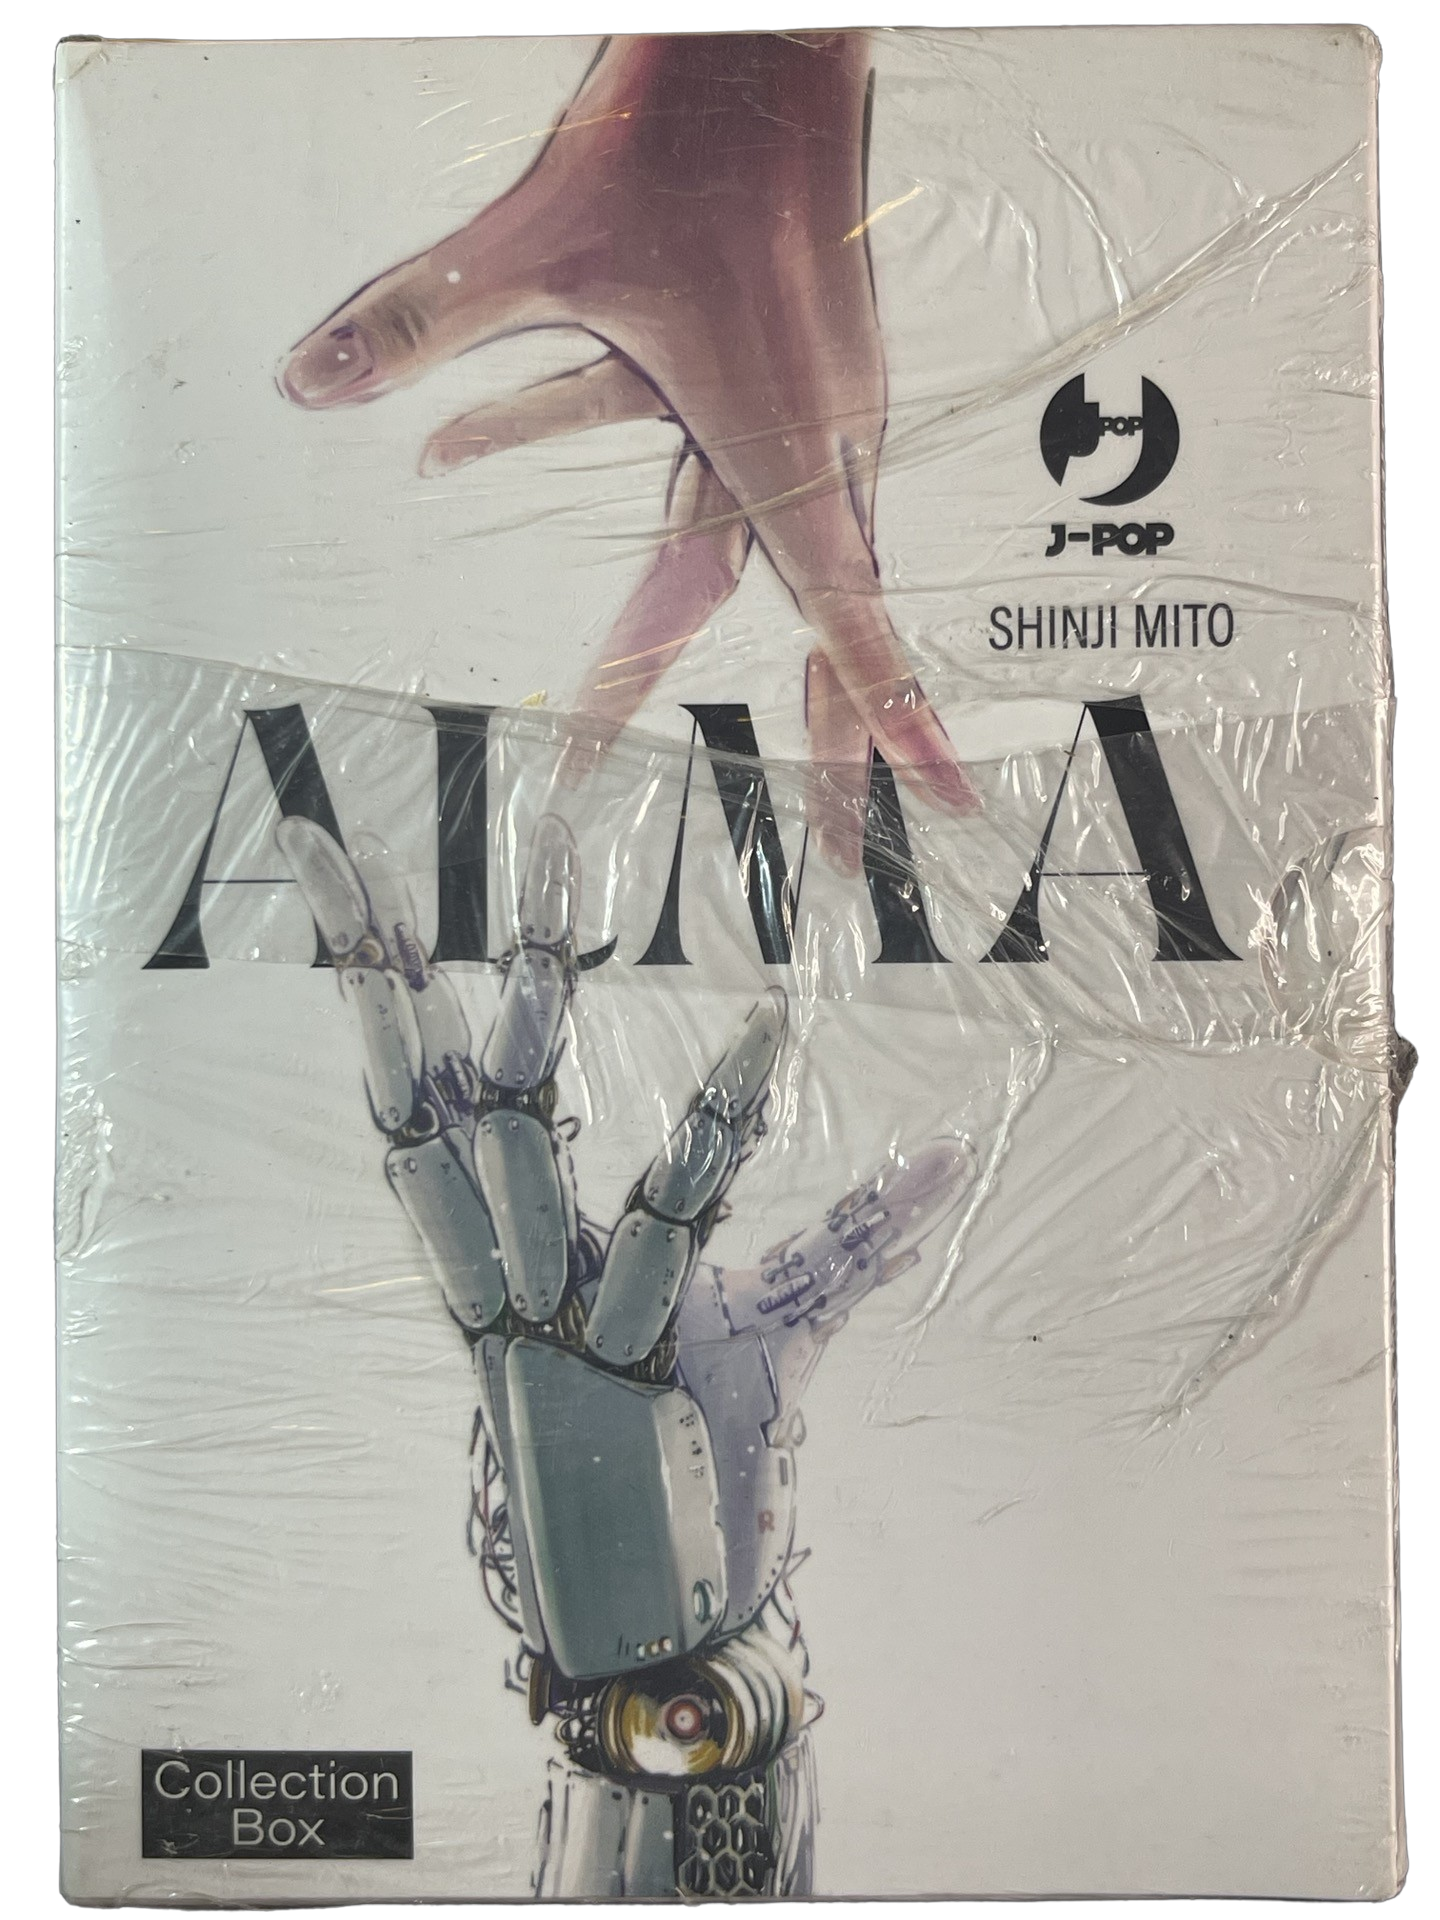 Alma Collection Box Vol. 1-4